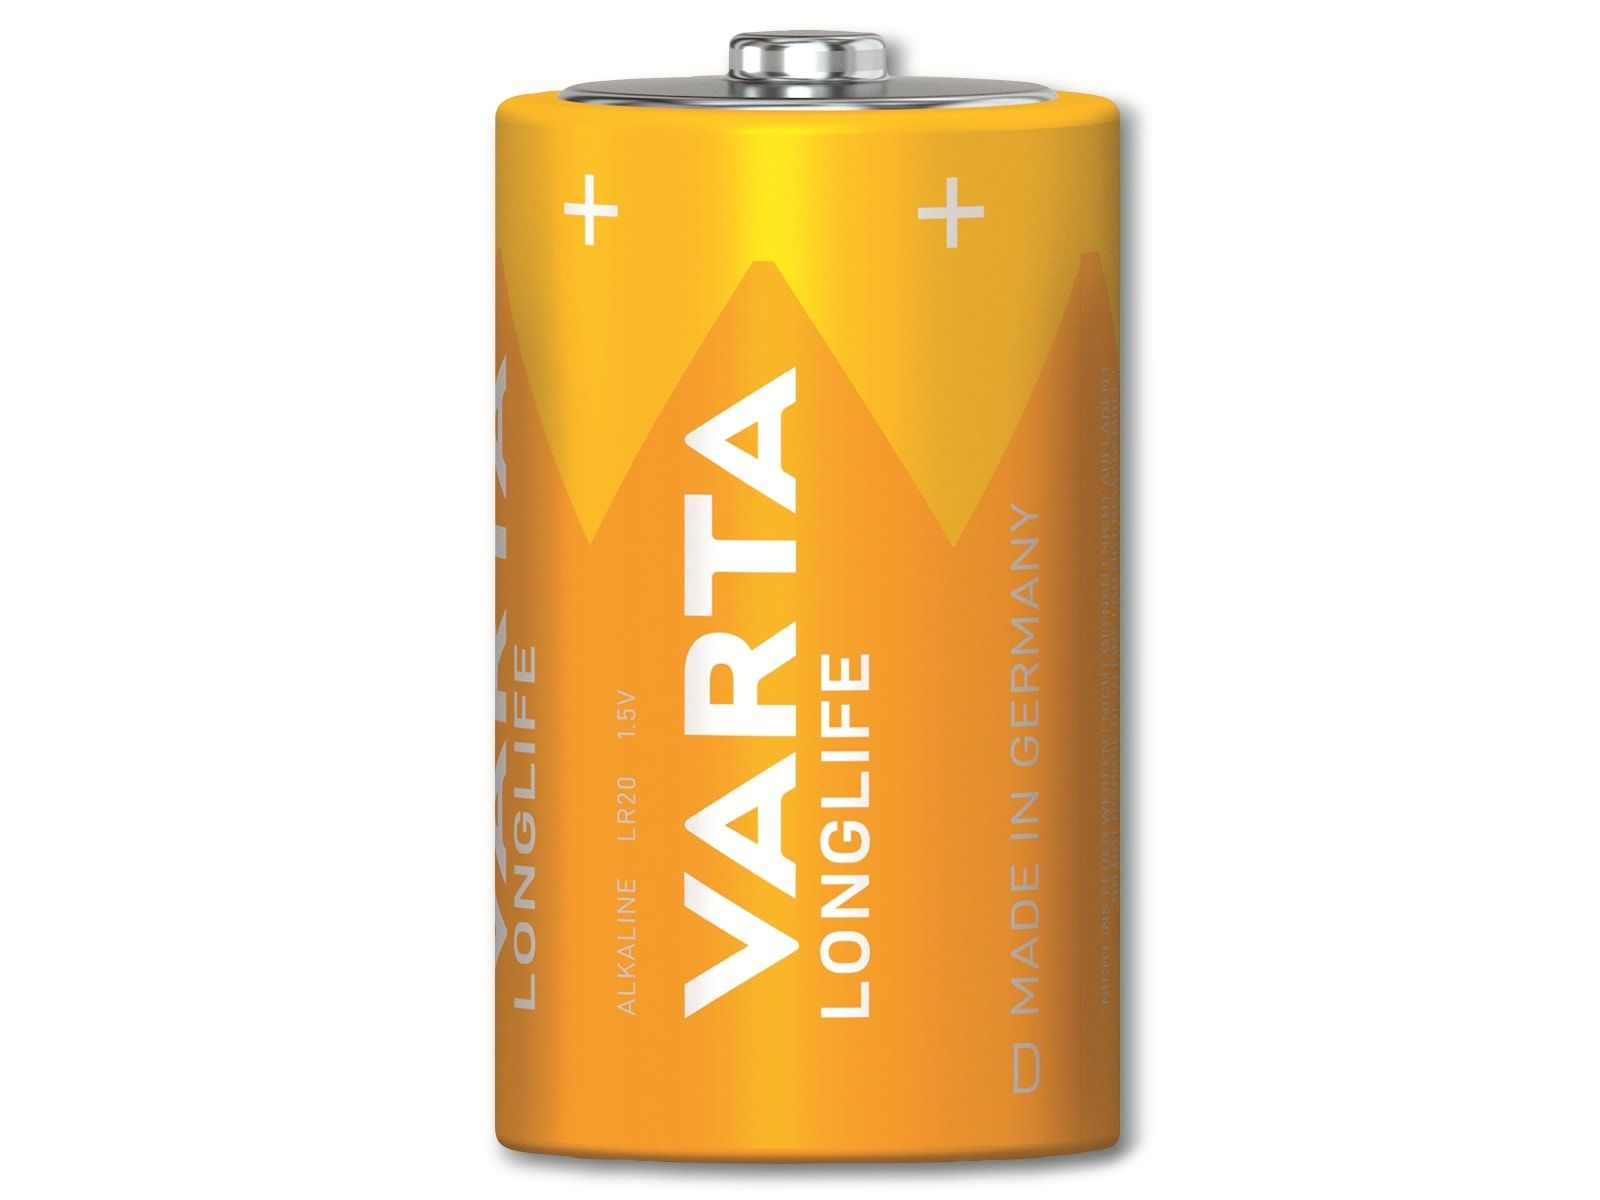 VARTA Batterie, Longlife Blister) 15.8 4120 (2er Distancia Volt, Batterie D Mono Ah Mando AlMn, LR20 1.5